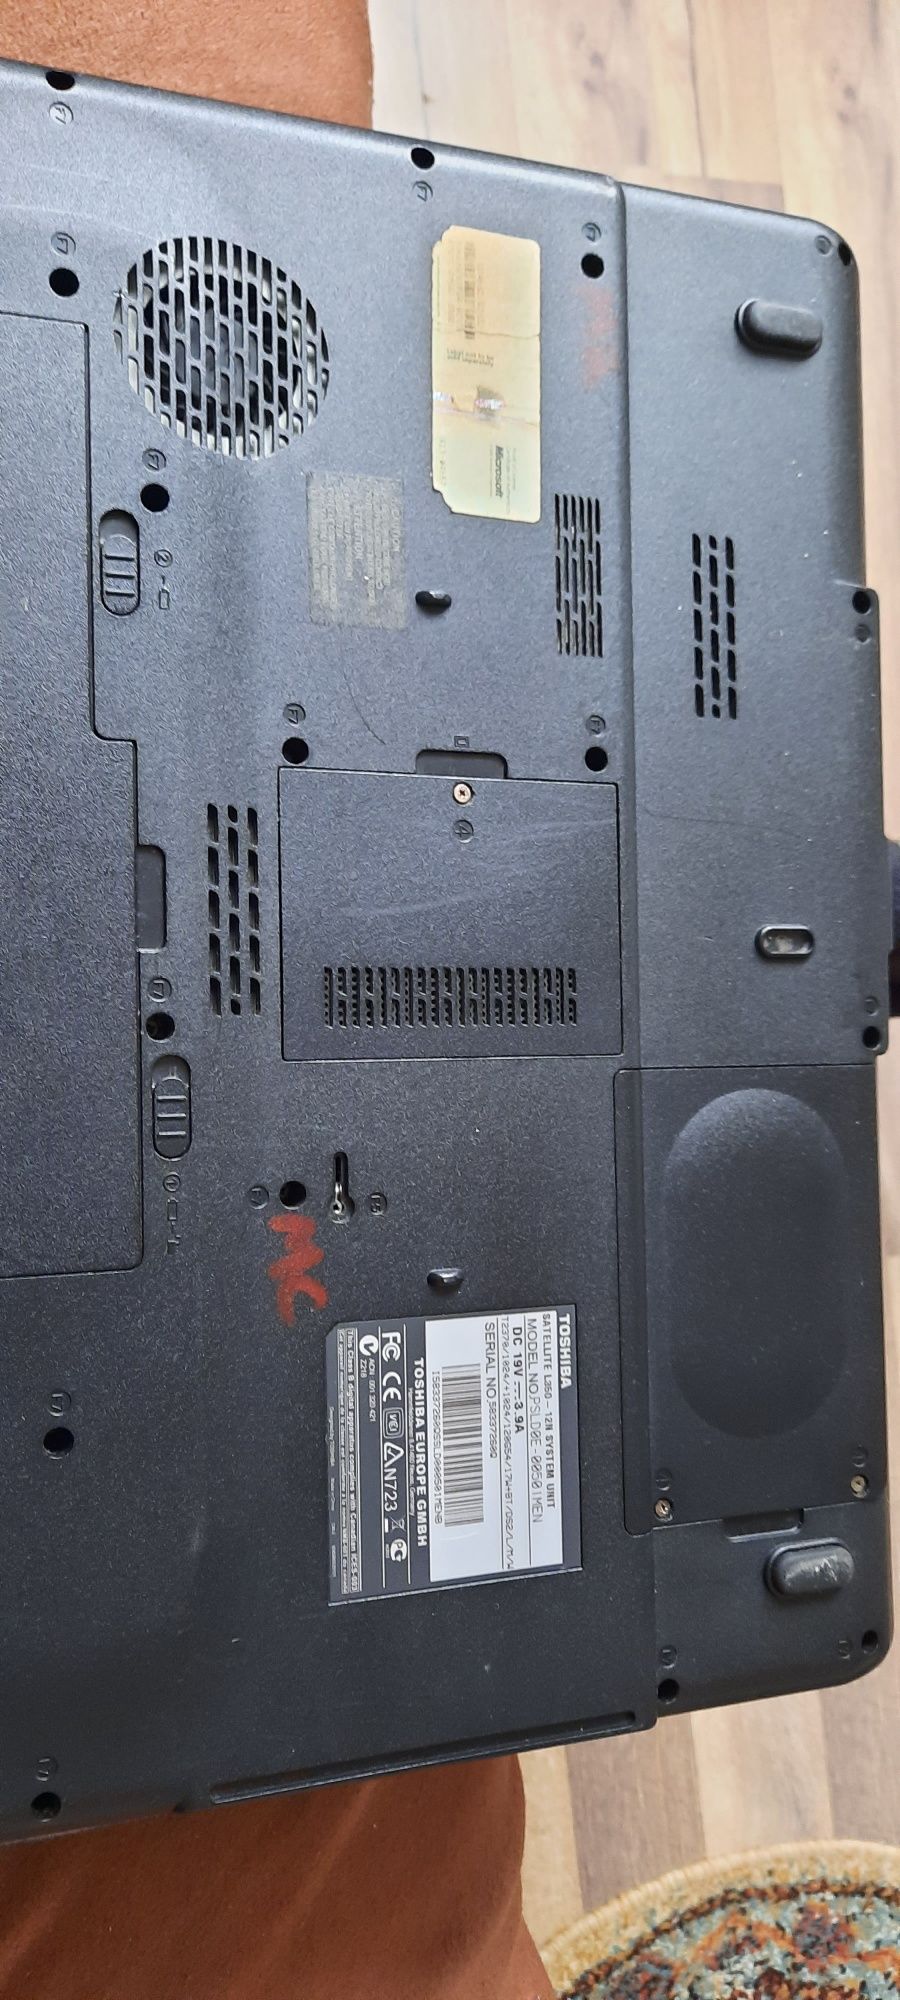 Laptop Toshiba L350D